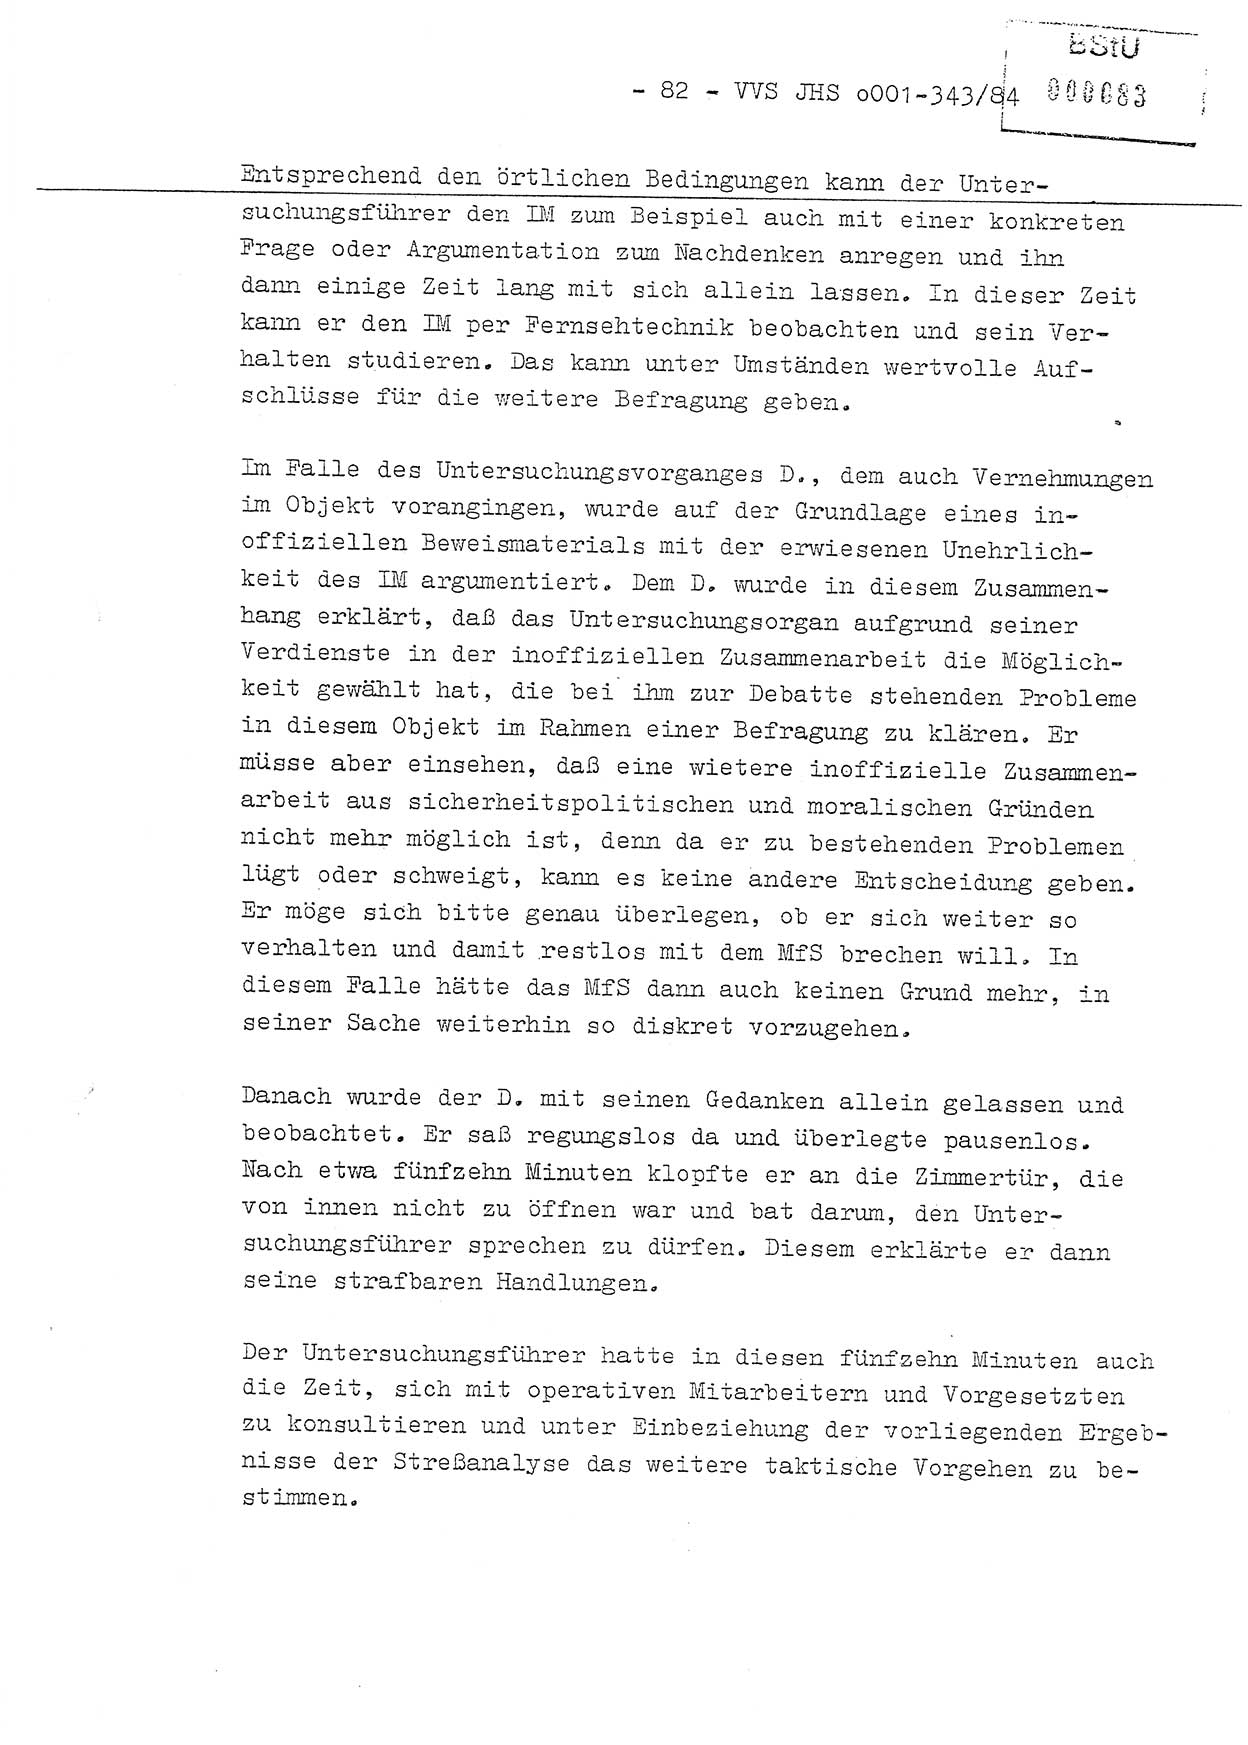 Diplomarbeit, Oberleutnant Bernd Michael (HA Ⅸ/5), Oberleutnant Peter Felber (HA IX/5), Ministerium für Staatssicherheit (MfS) [Deutsche Demokratische Republik (DDR)], Juristische Hochschule (JHS), Vertrauliche Verschlußsache (VVS) o001-343/84, Potsdam 1985, Seite 82 (Dipl.-Arb. MfS DDR JHS VVS o001-343/84 1985, S. 82)